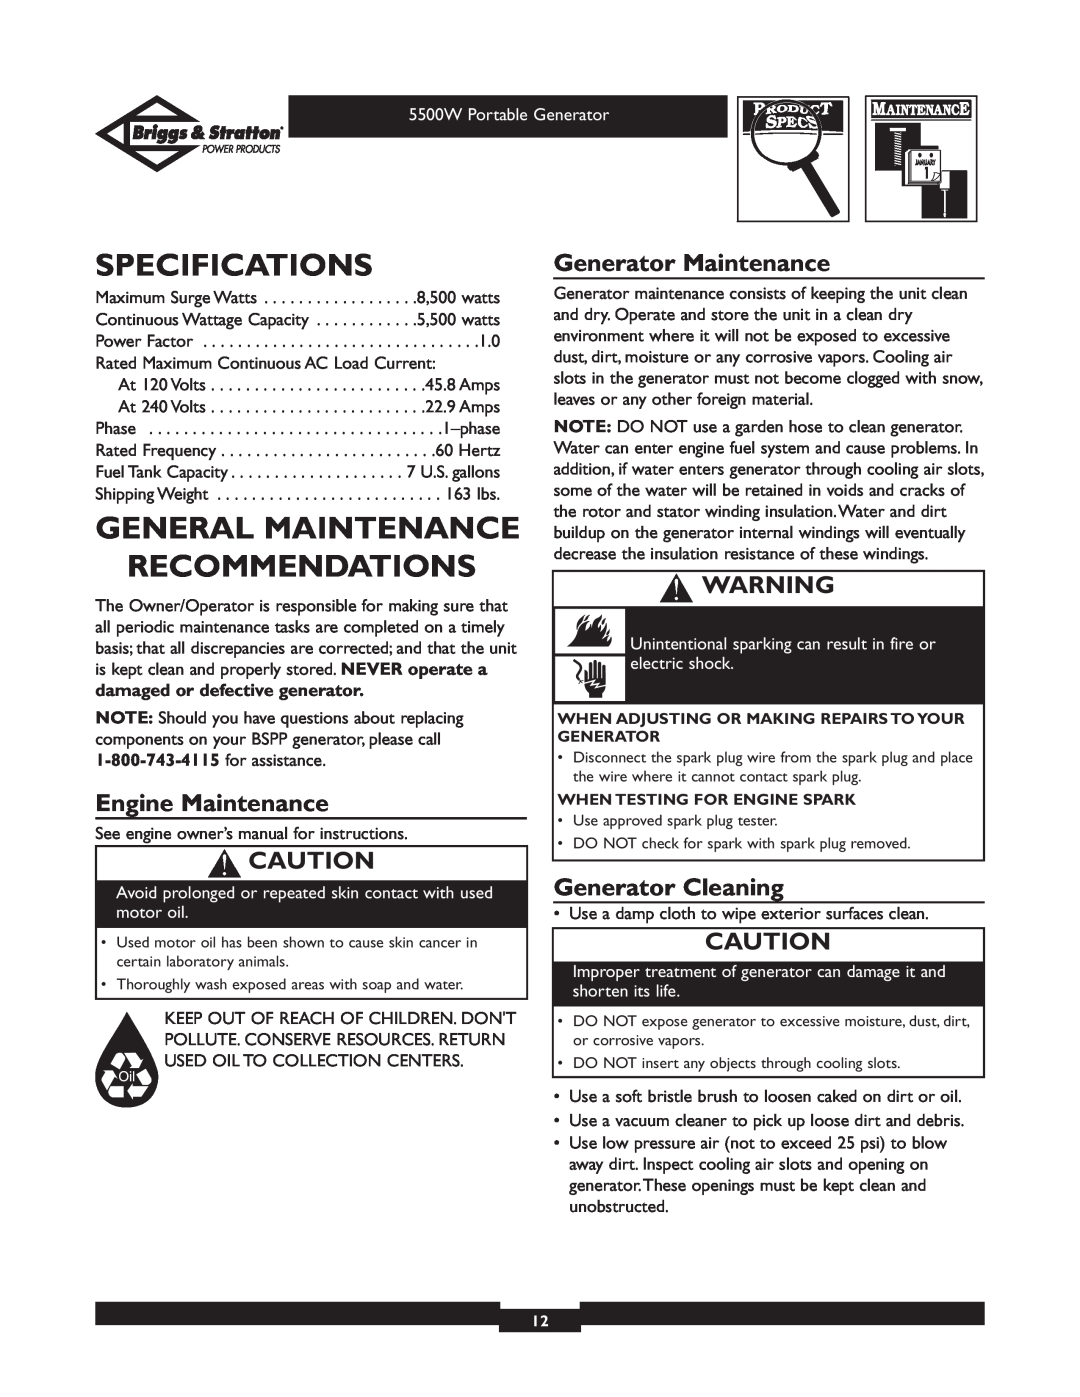 Briggs & Stratton 030209 Specifications, General Maintenance Recommendations, Engine Maintenance, Generator Maintenance 